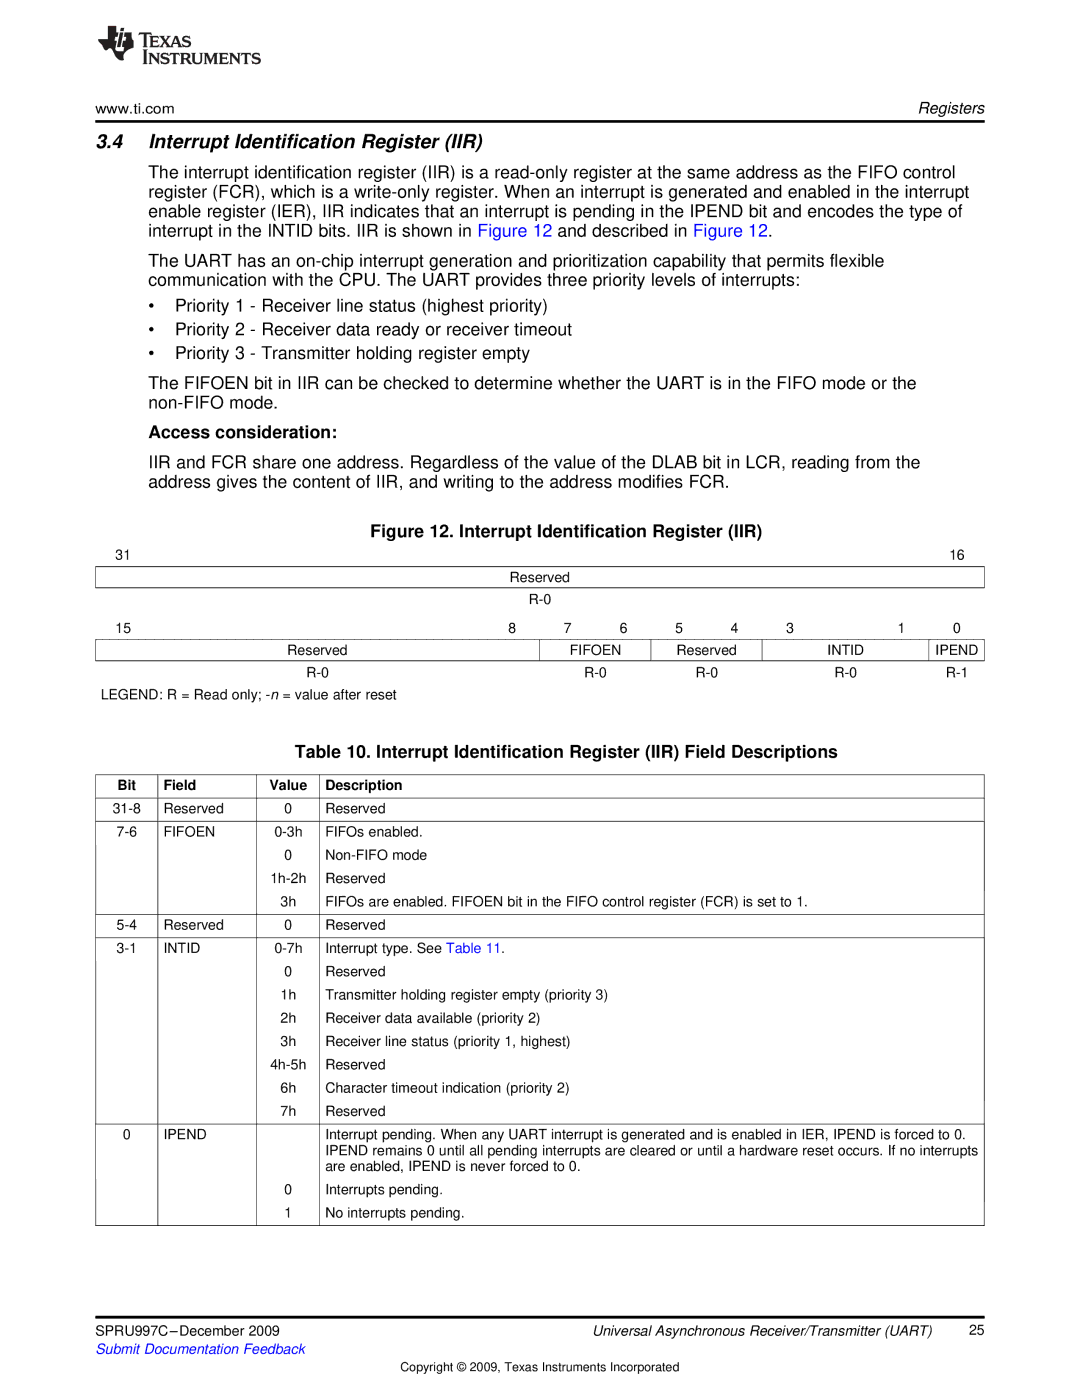 Texas Instruments TMS320DM643X DMP manual Interrupt Identification Register IIR, Access consideration 